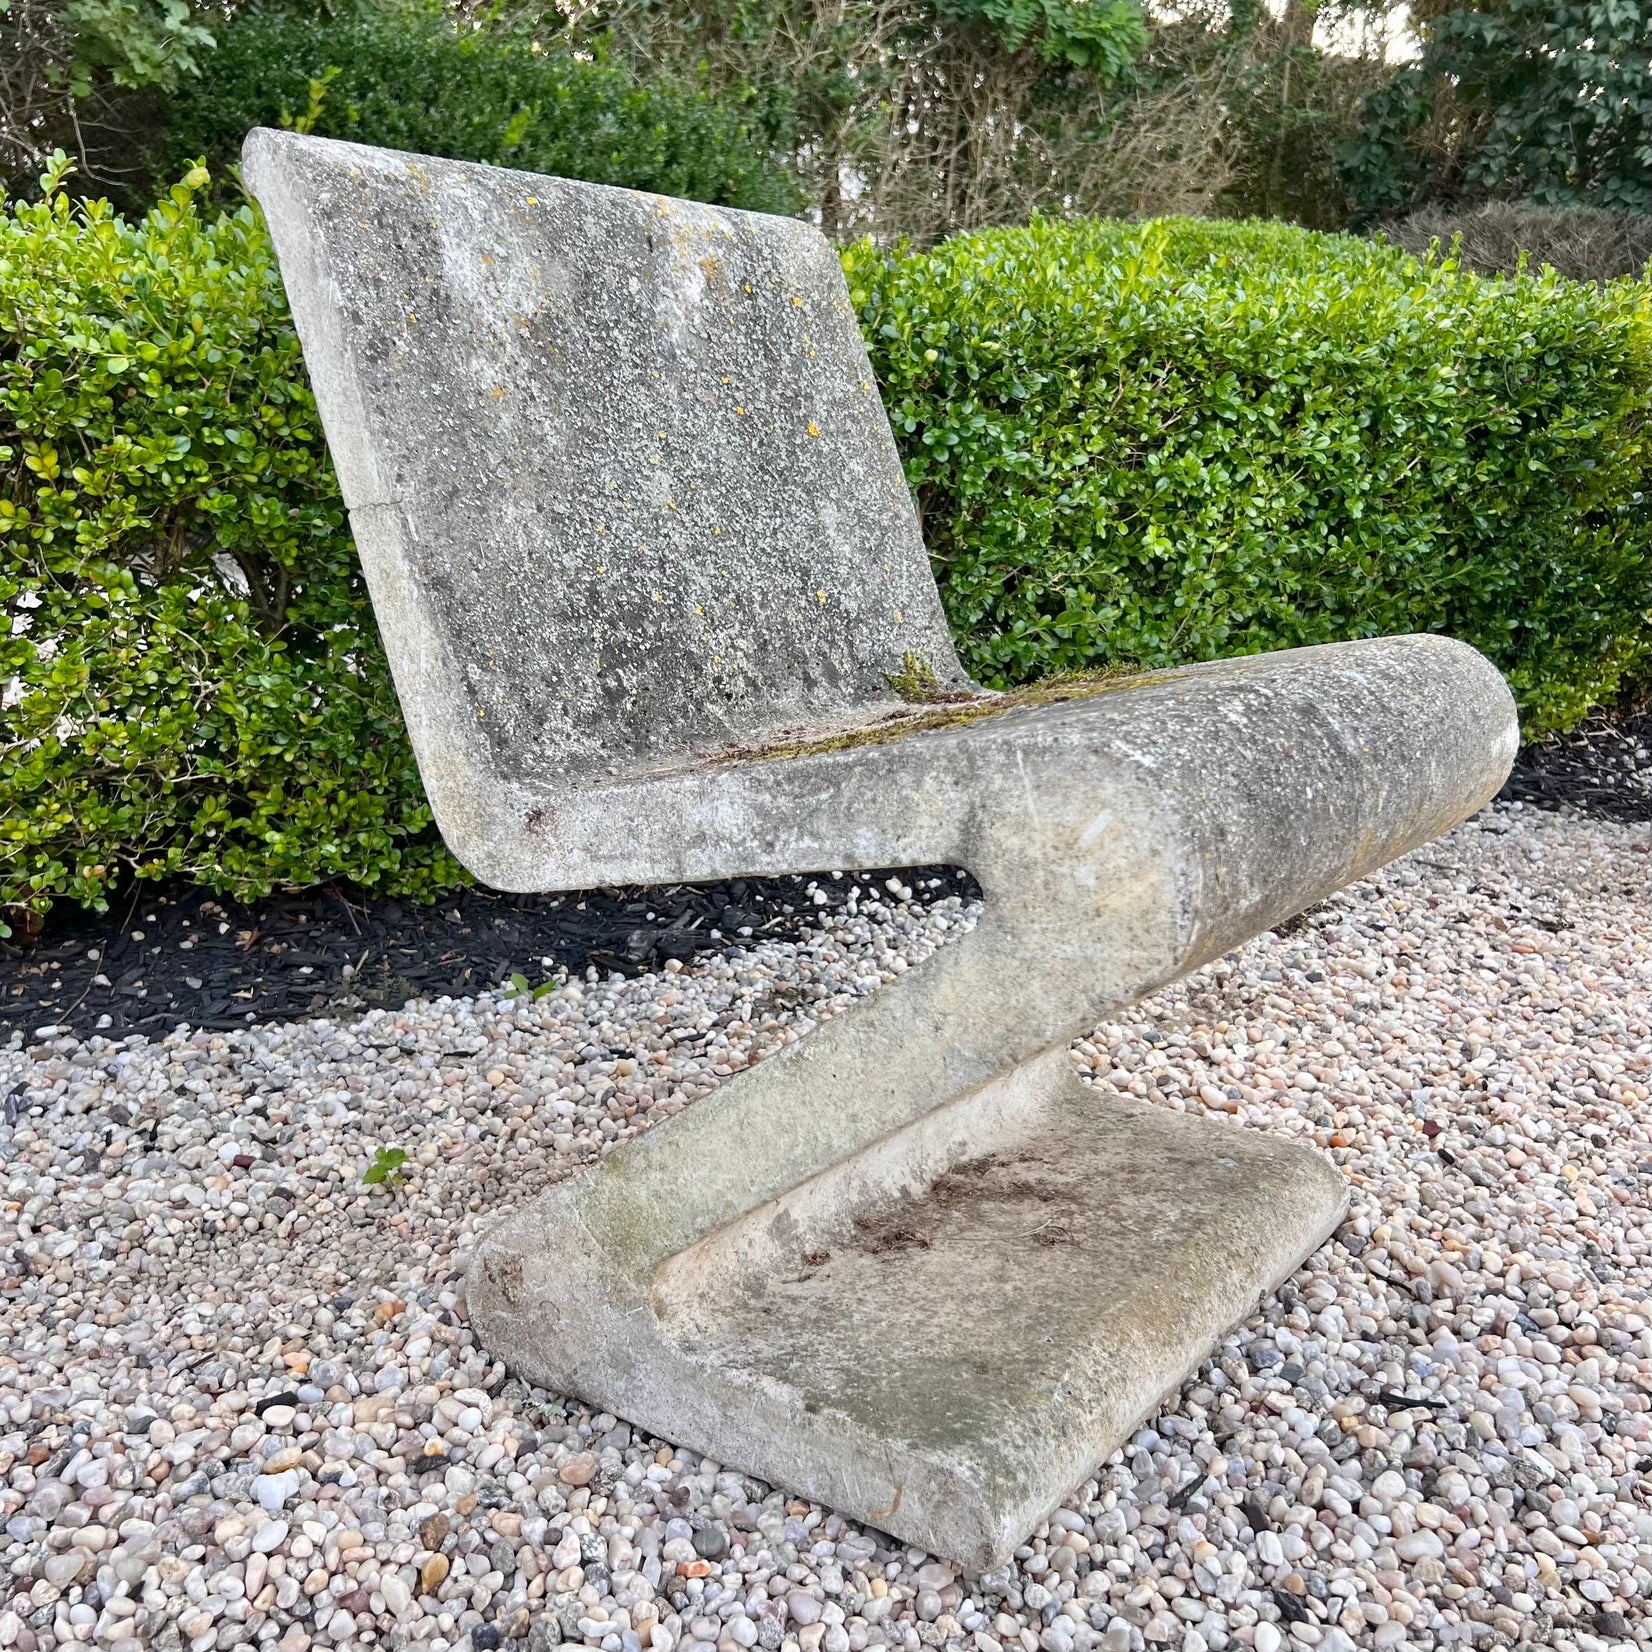 Pair of Sculptural Concrete Zig Zag Chairs, 1960s Switzerland